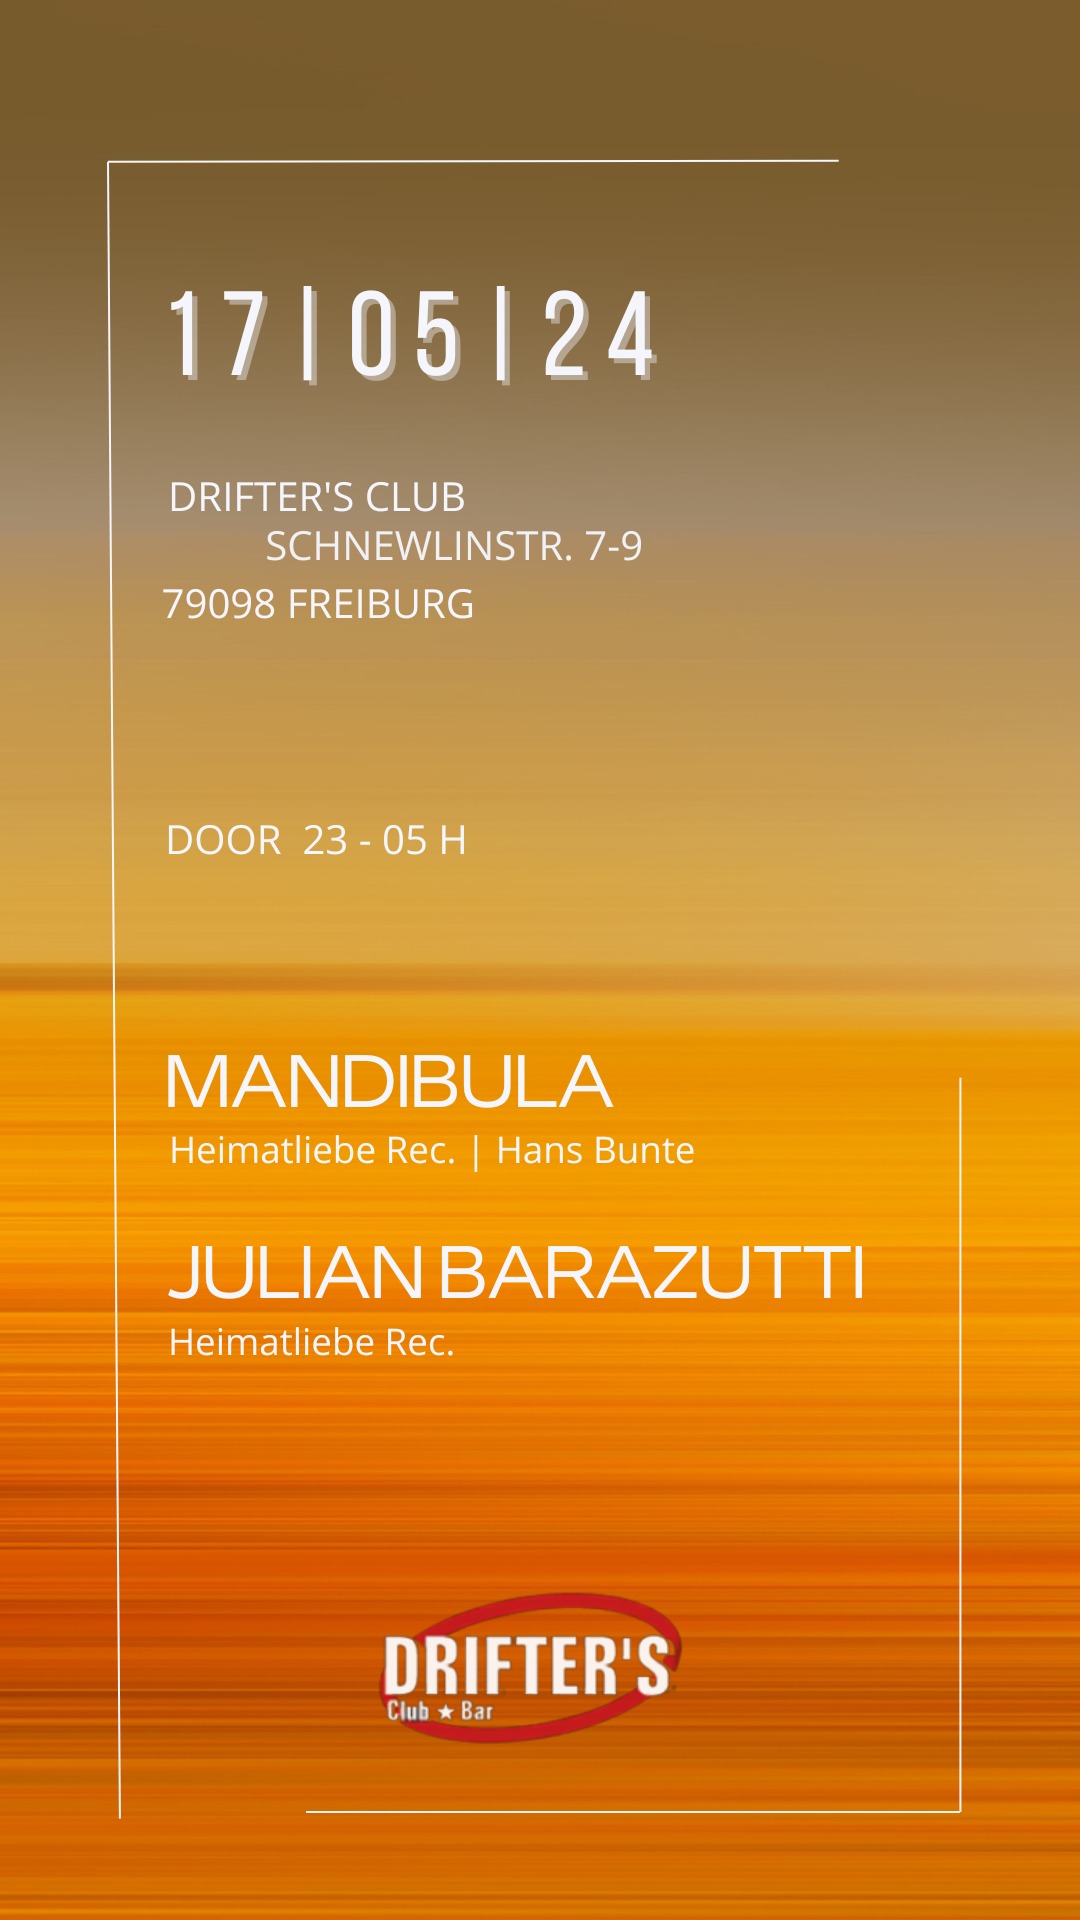 szene-Radar - Mandibula + Julian Barazutti, Drifters Club  in Freiburg im Breisgau